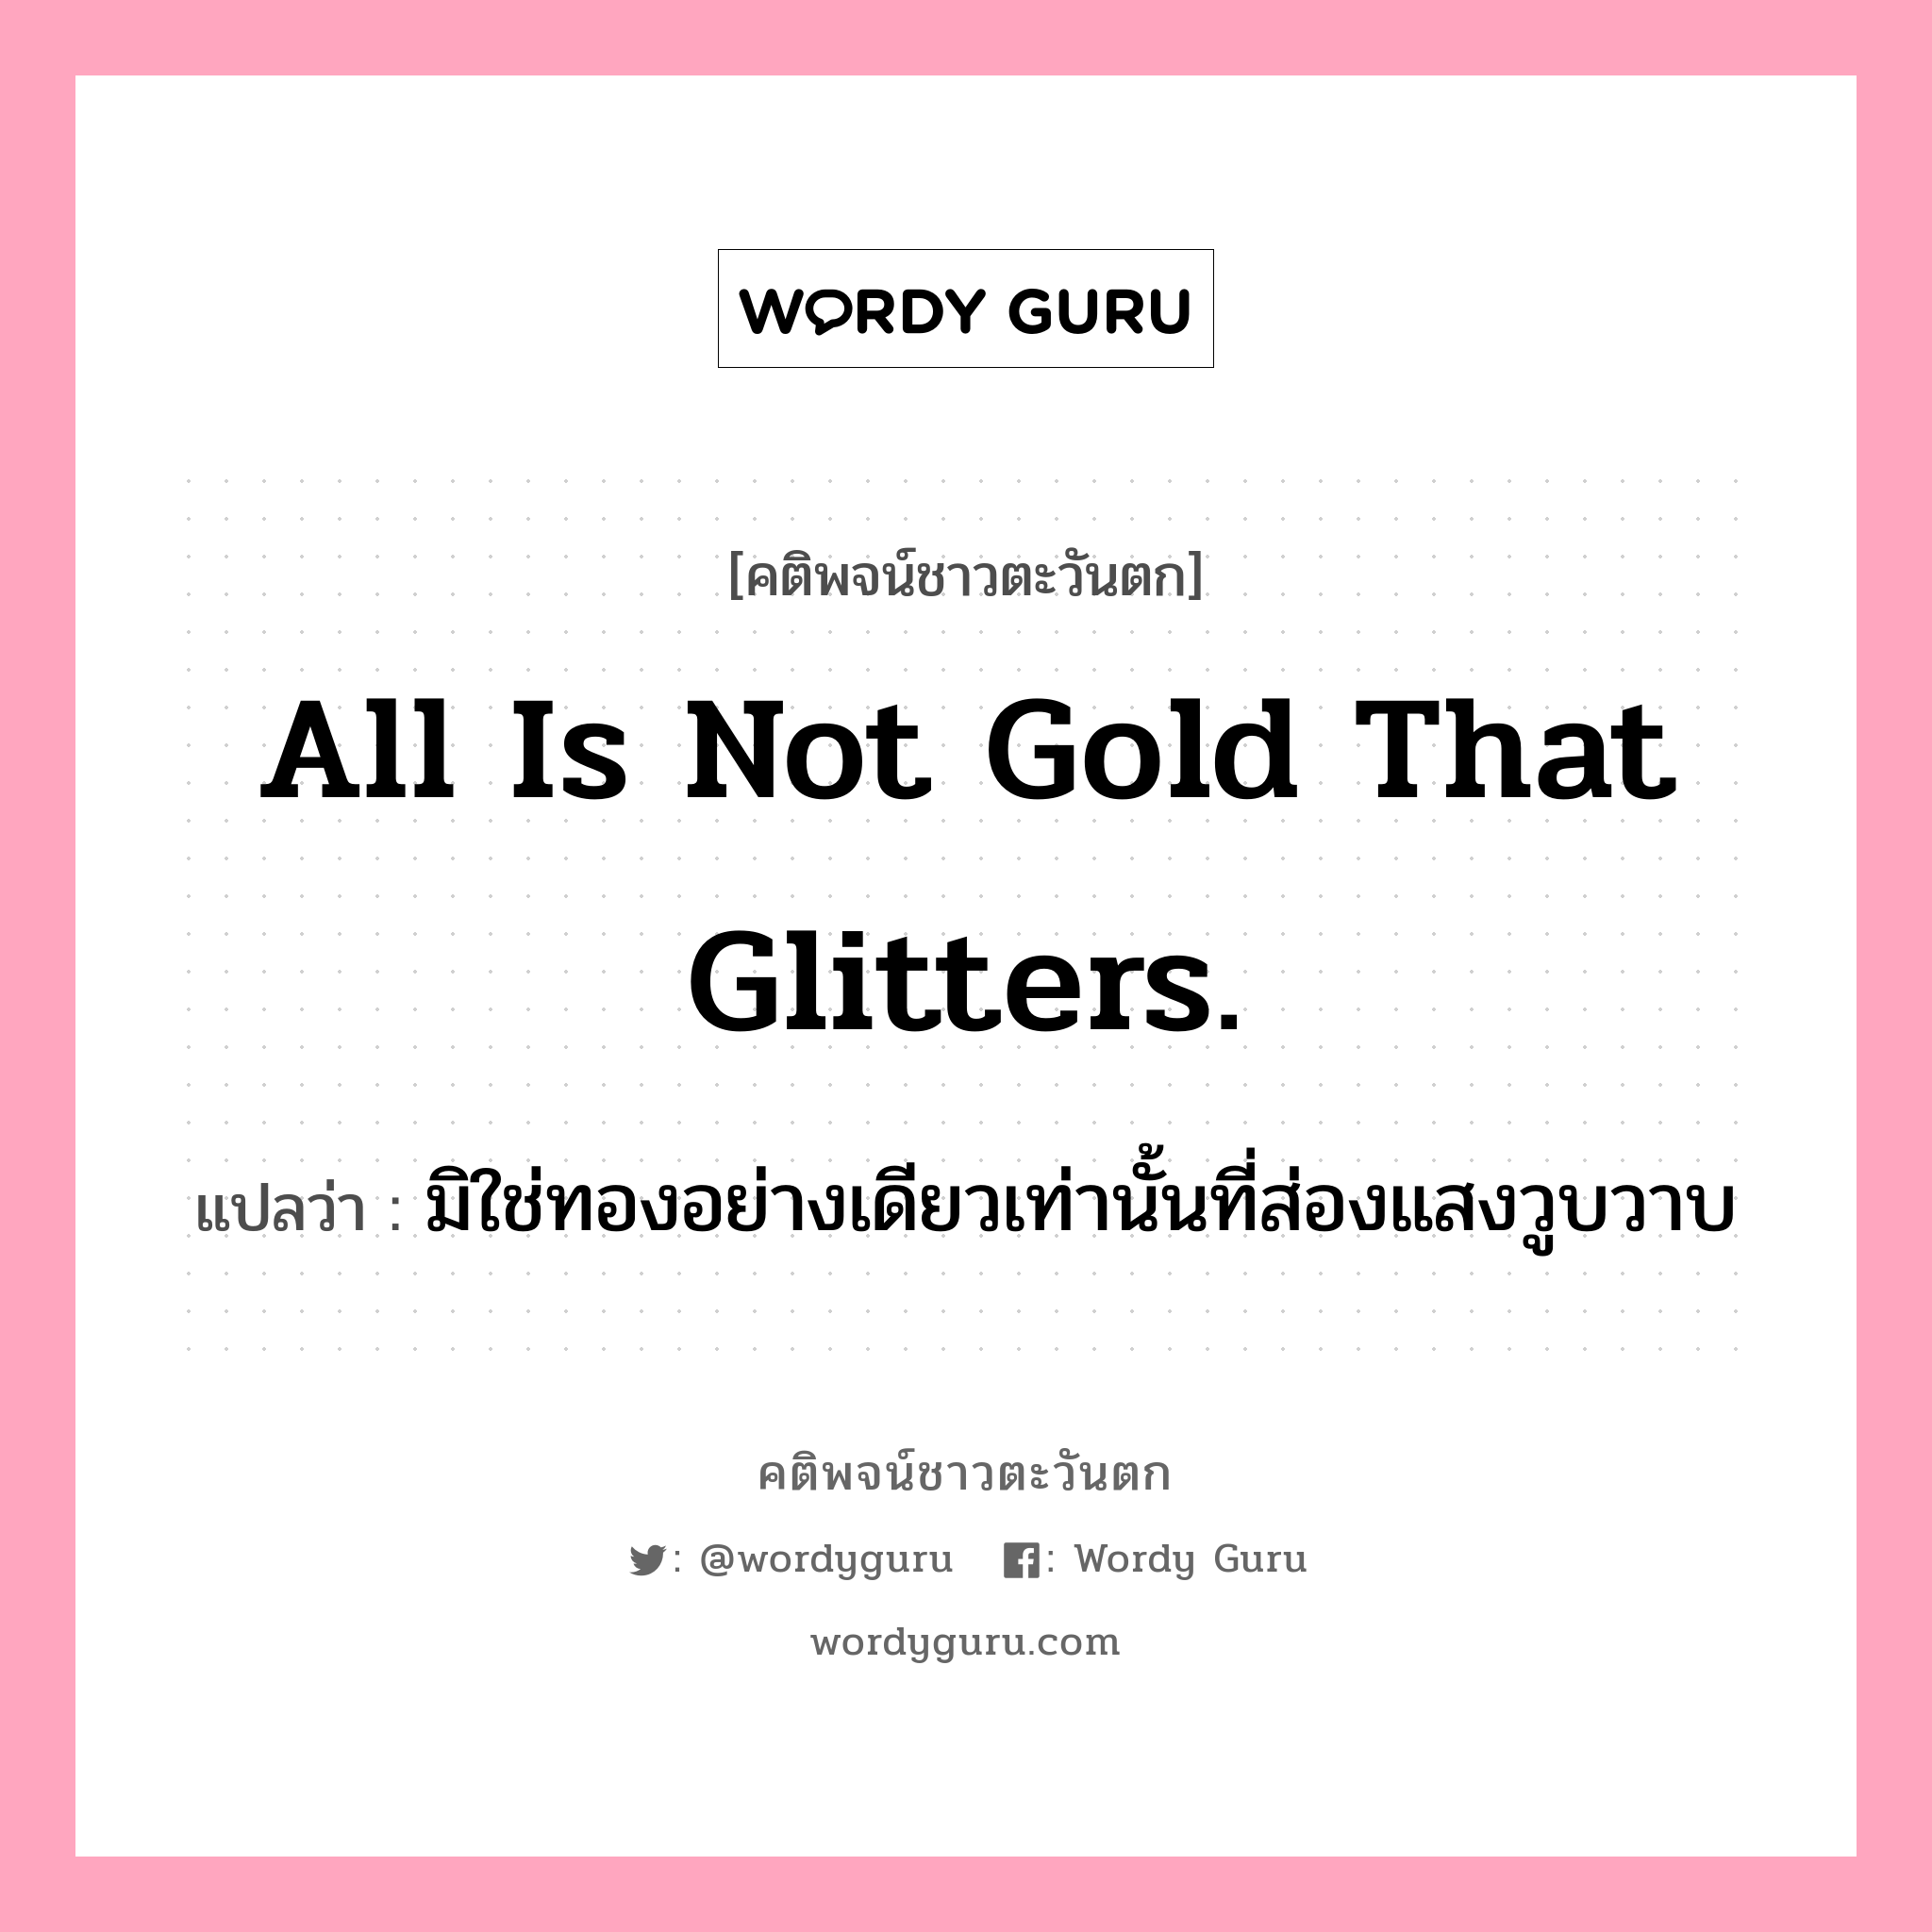 All is not gold that glitters., คติพจน์ชาวตะวันตก All is not gold that glitters. แปลว่า มิใช่ทองอย่างเดียวเท่านั้นที่ส่องแสงวูบวาบ